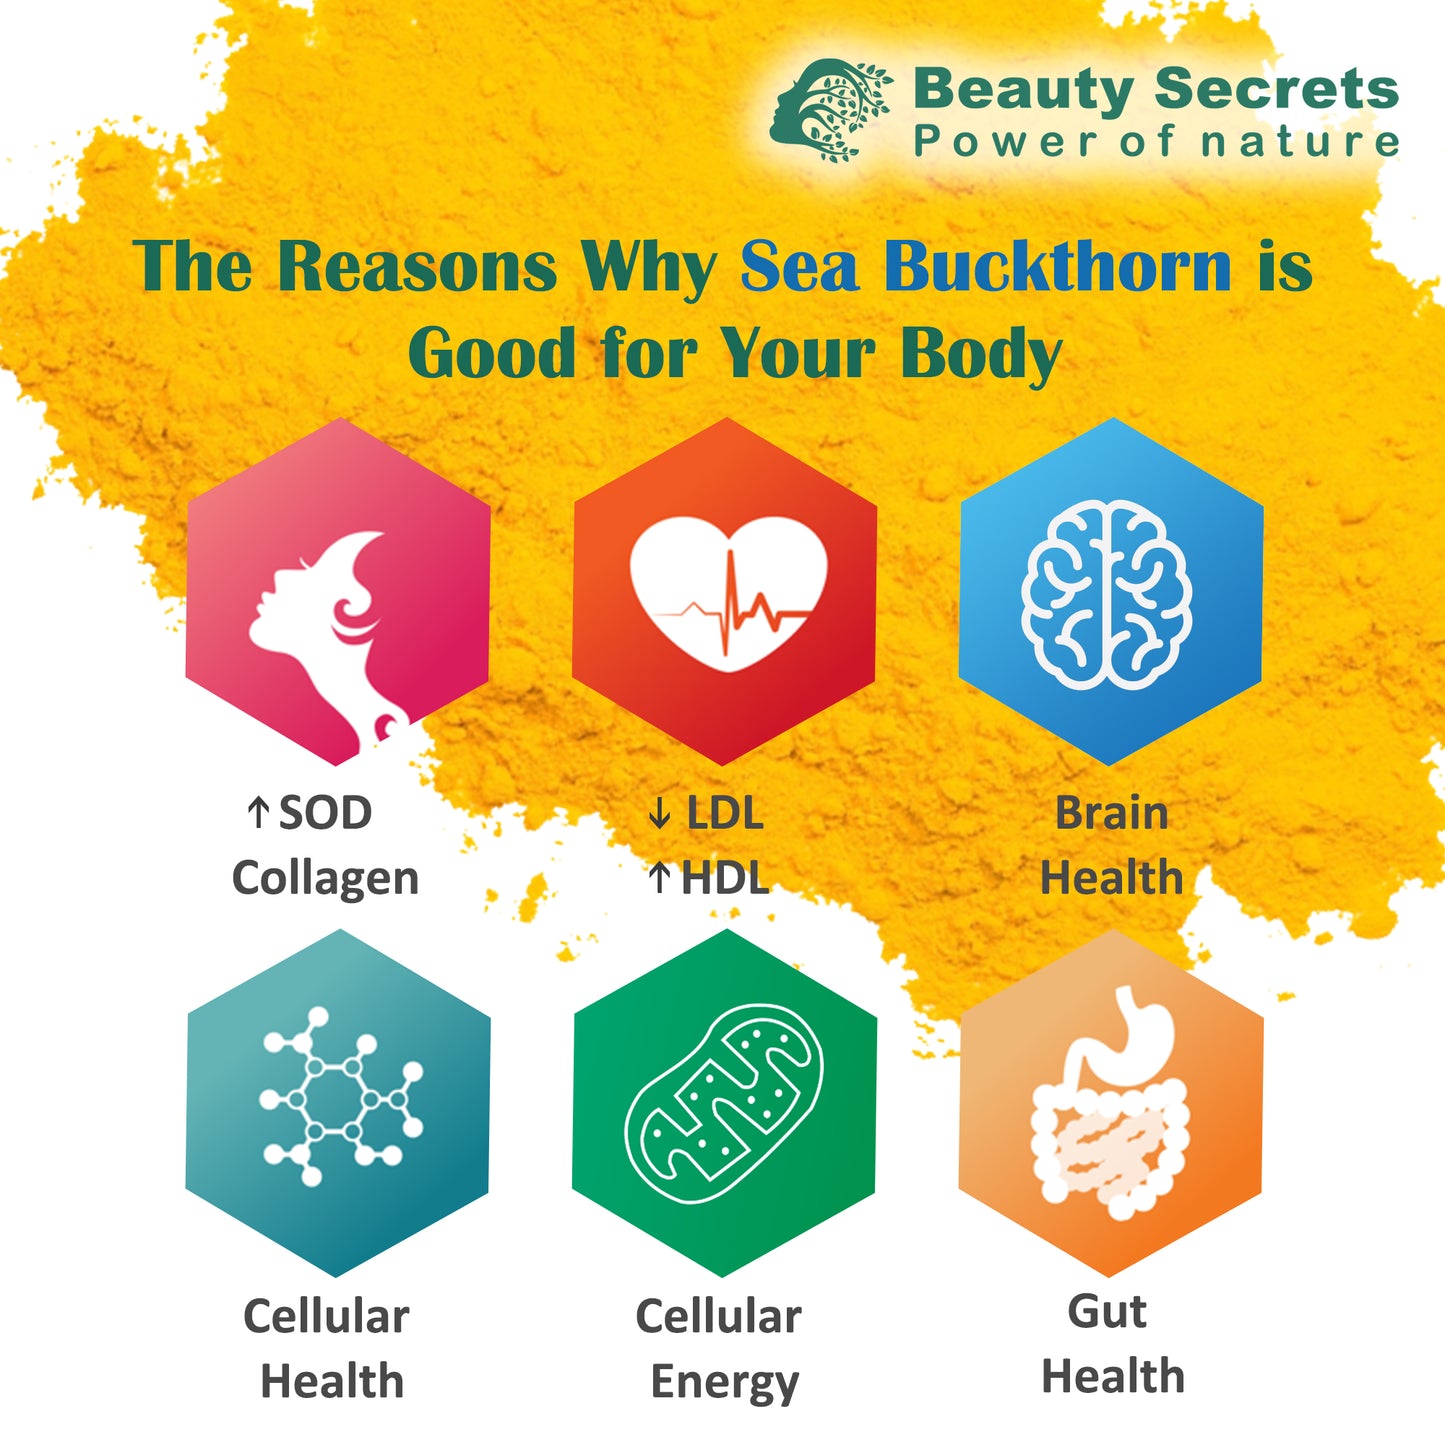 Beauty Secrets Sea Buckthorn Capsules (Pack of 60)